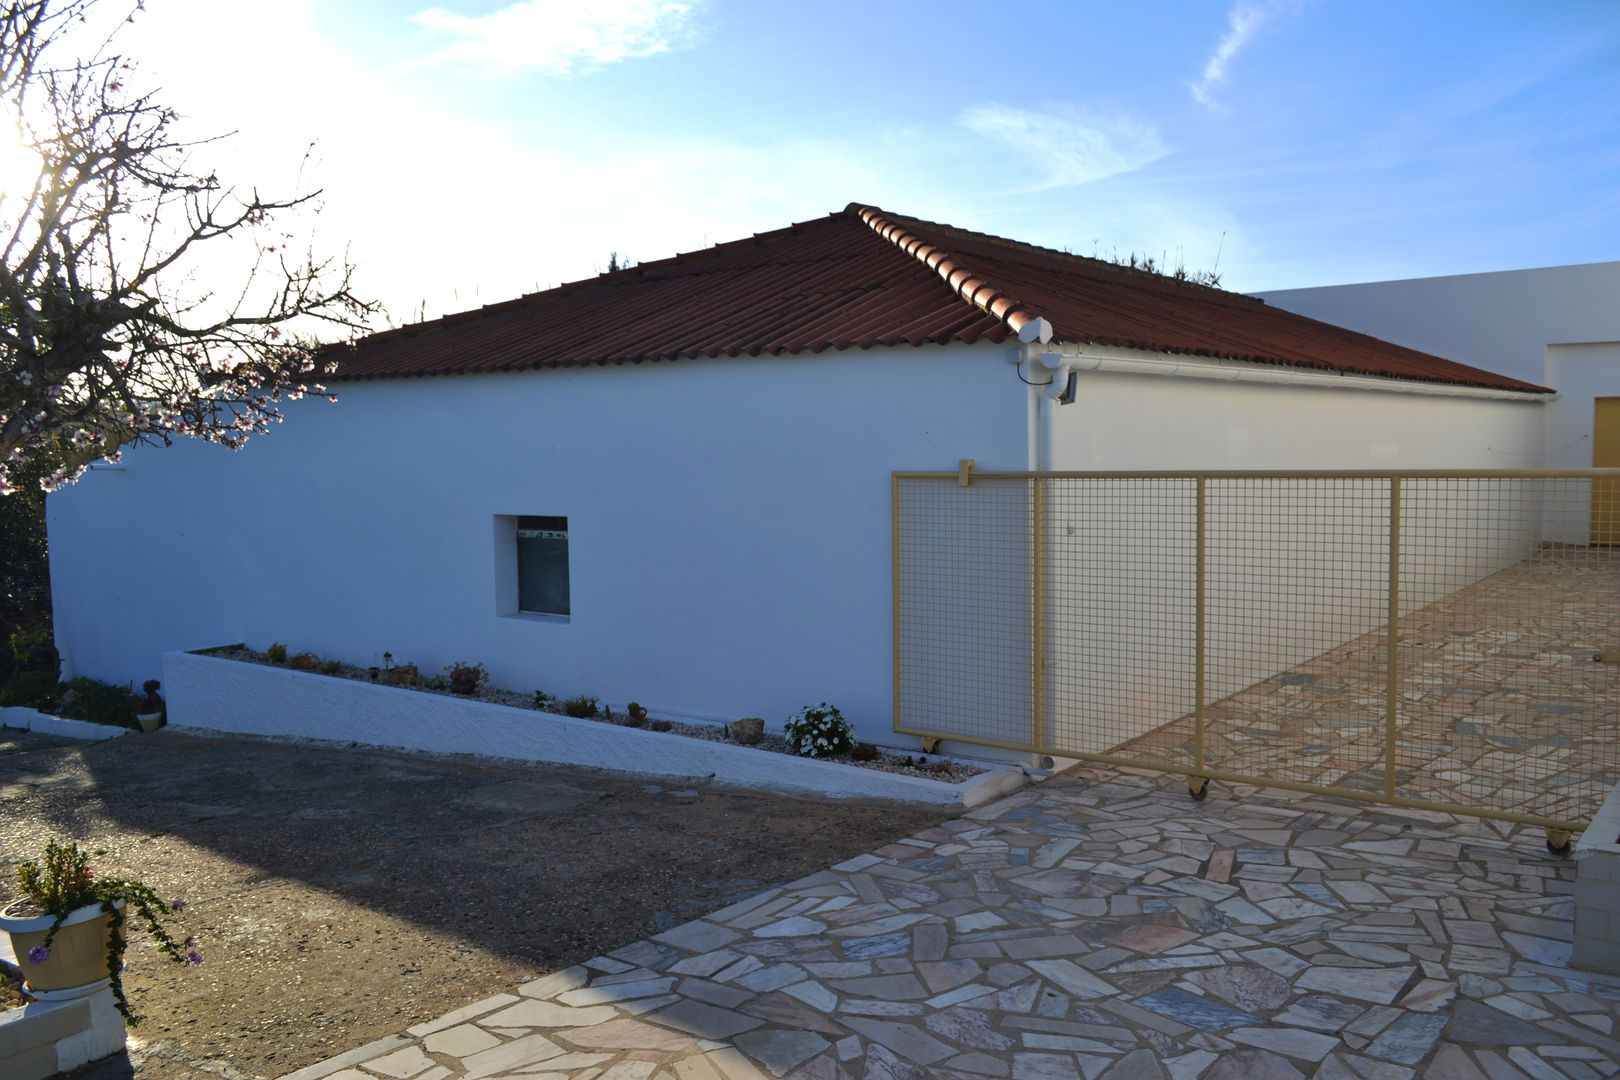 Facade Renovation / Repairing Cracks RenoBuild Algarve Mediterranean style house